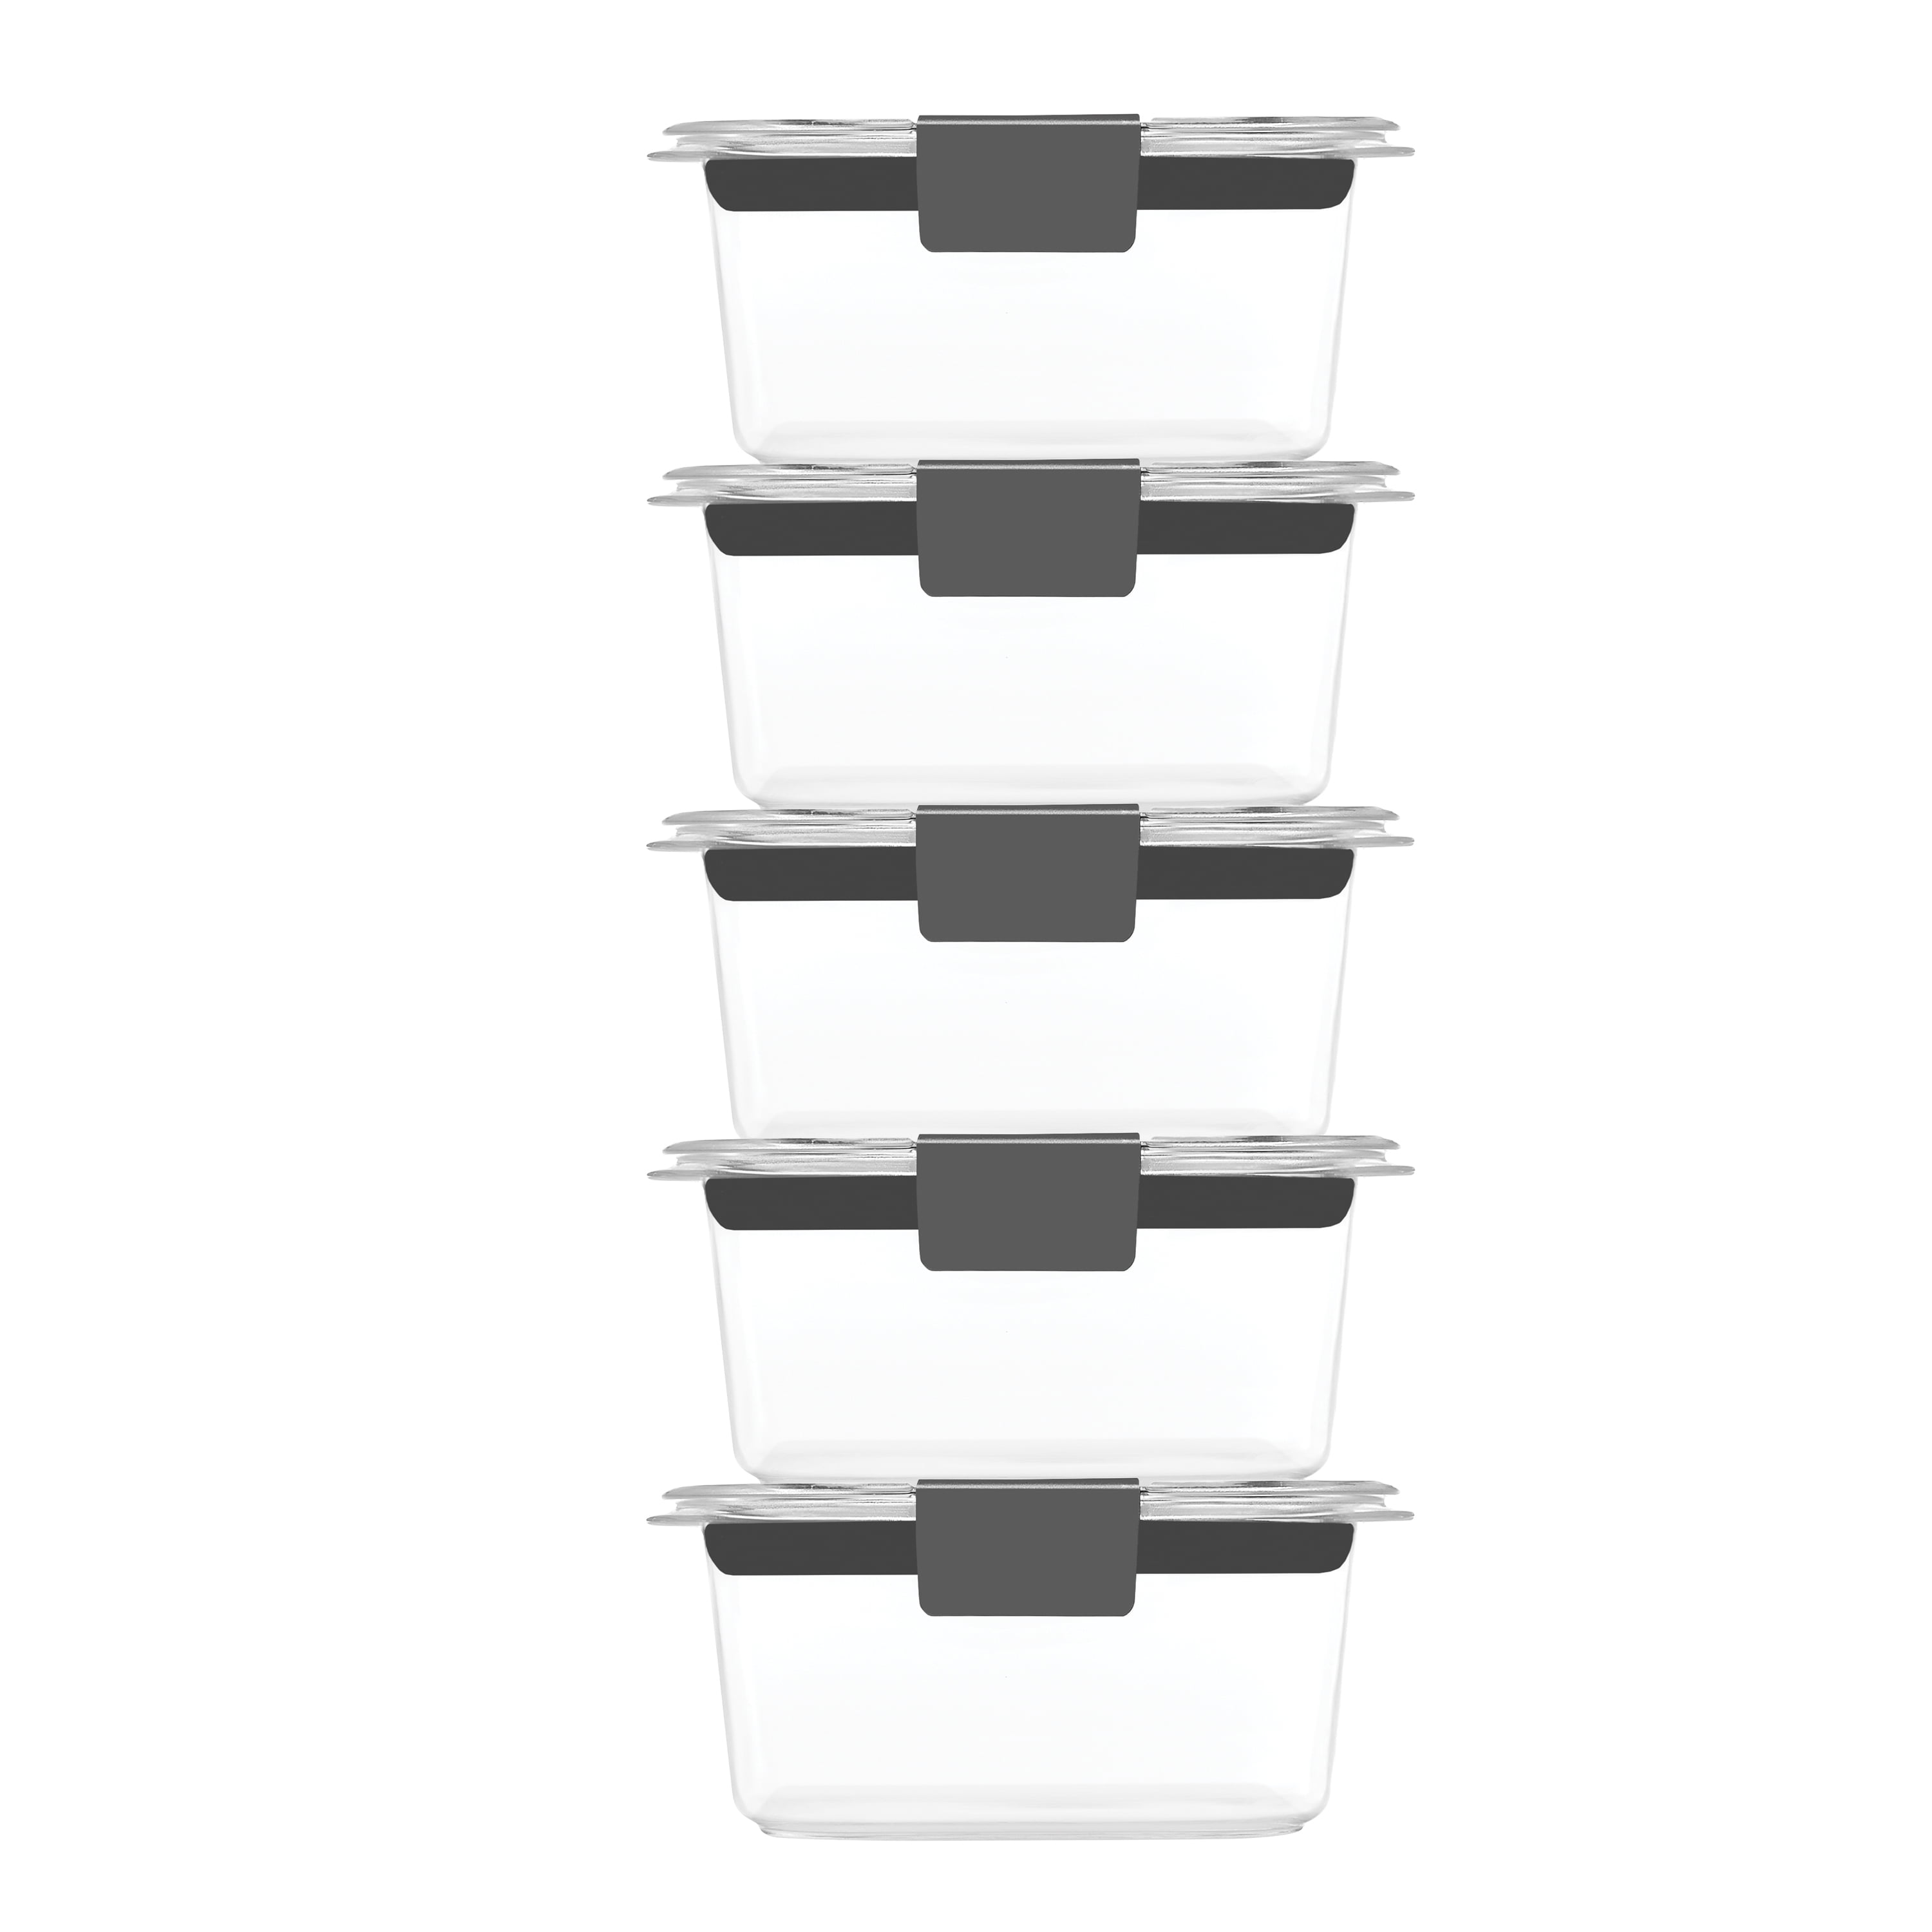 Premius Air-Tight Plastic Food Storage Container, Black-Clear, 1.3